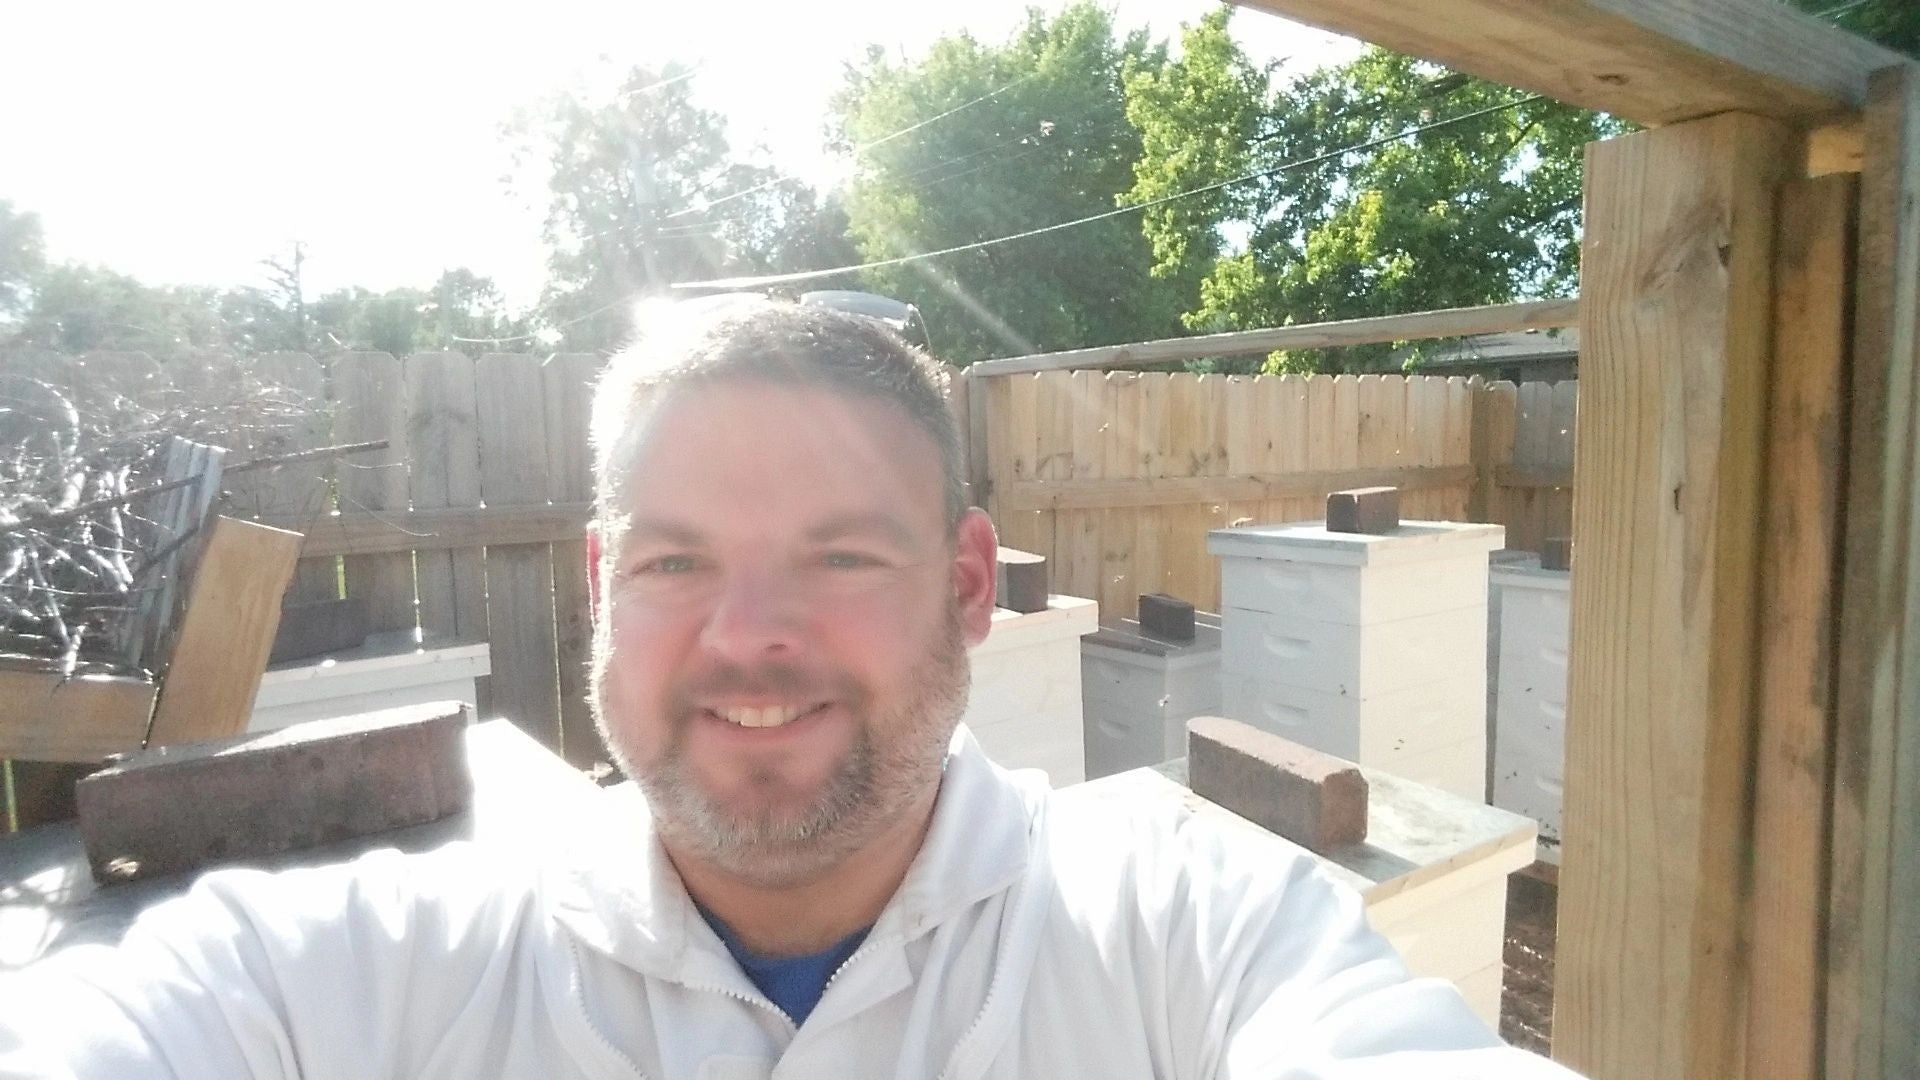 Dean Coleman, the beekeeper